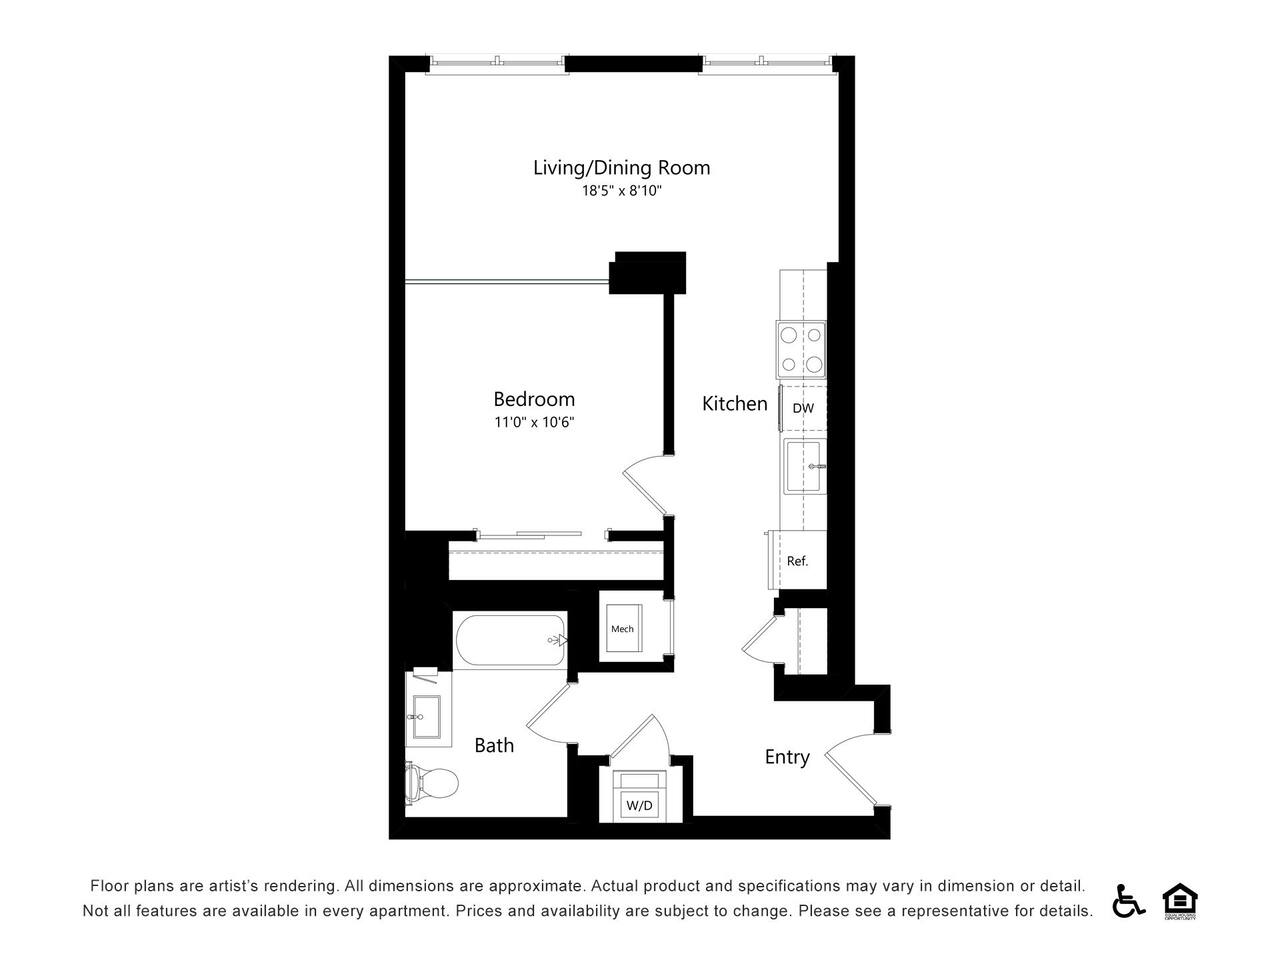 Floorplan diagram for B49, showing 1 bedroom